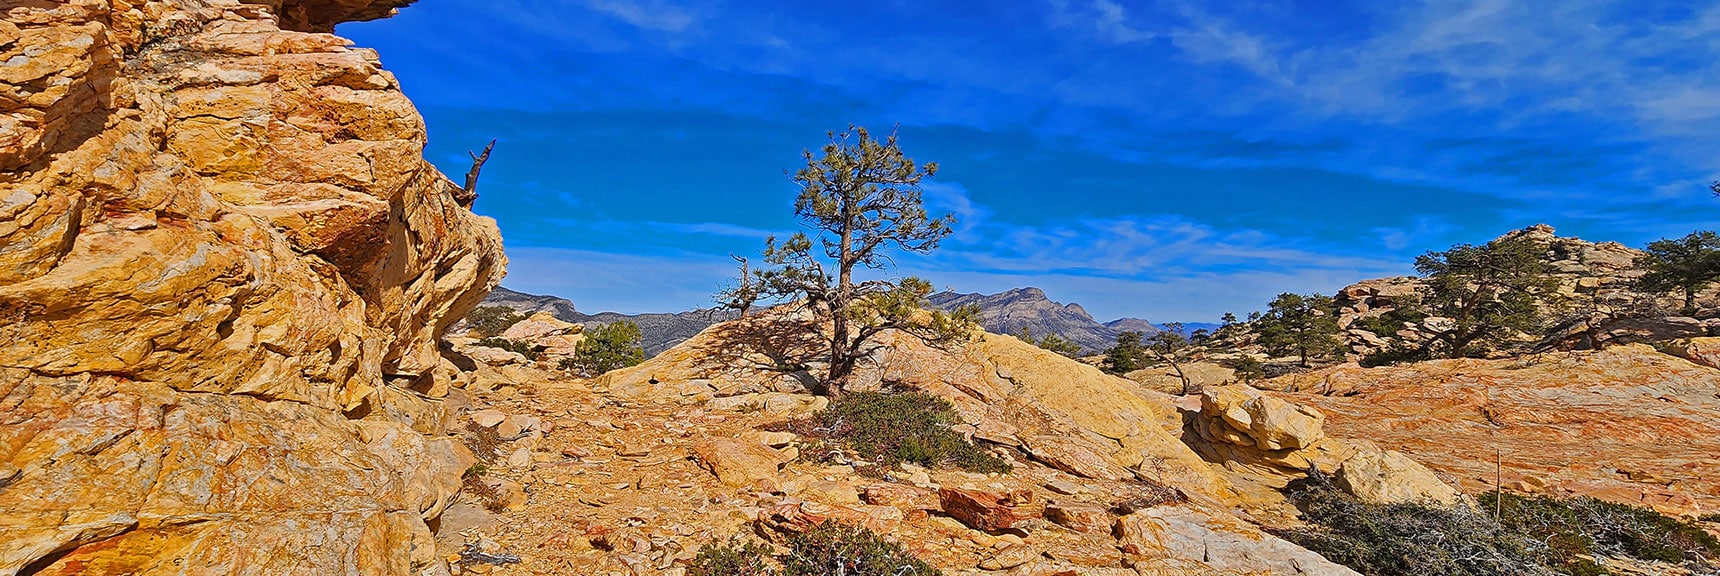 Artfully Placed Bonsai-Like Trees Emerge from the Jurassic Sandstone Surface | North Upper Crest Ridgeline | Rainbow Mountain Wilderness, Nevada